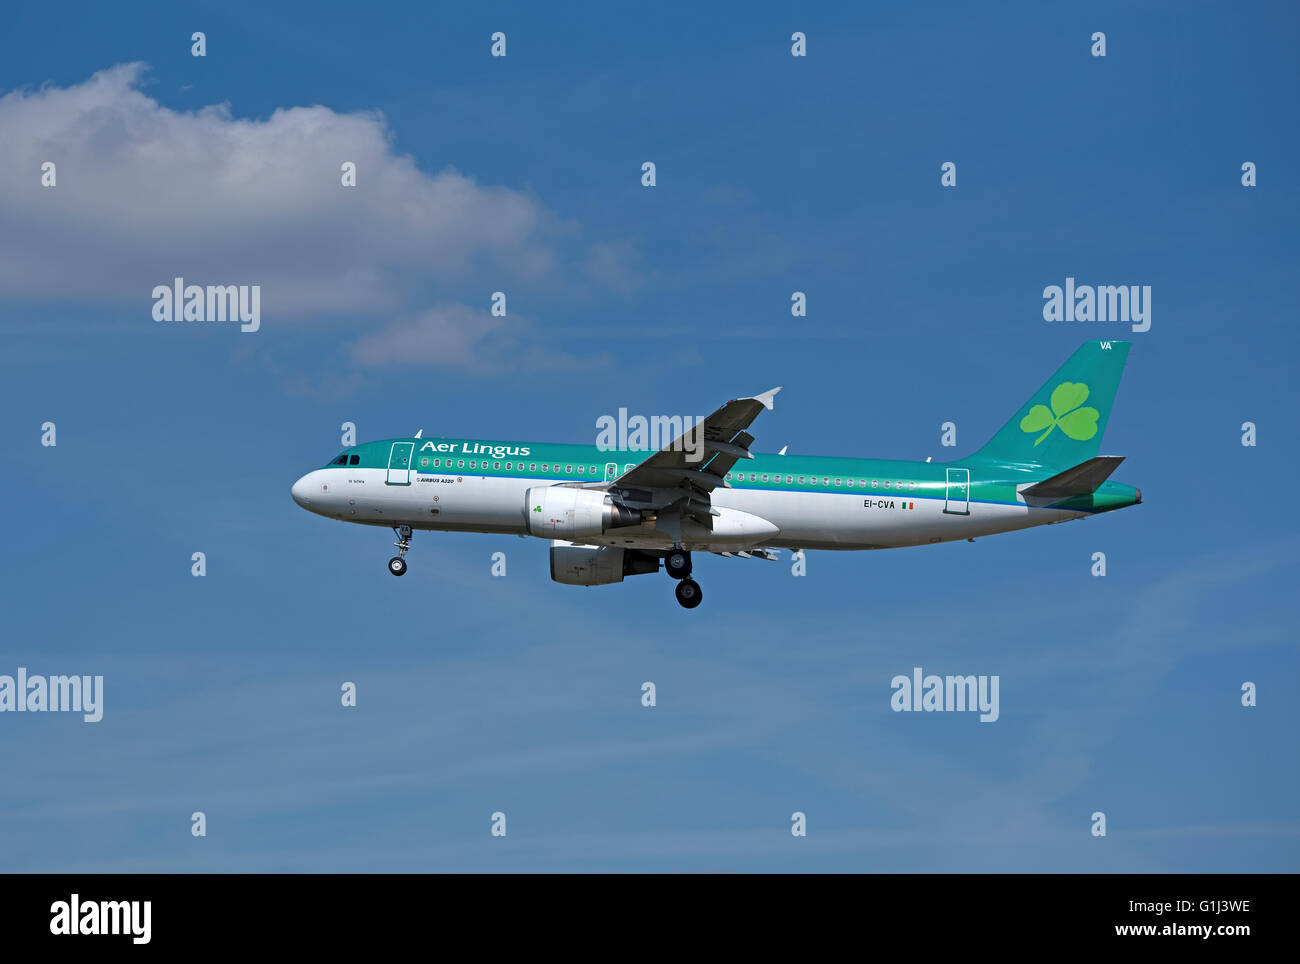 Aer Lingus Airbus A 320-214 Civil Passenger Aircraft ('St Shira') Approaching LHR London Heathrow Airport.  SCO 10,372. Stock Photo